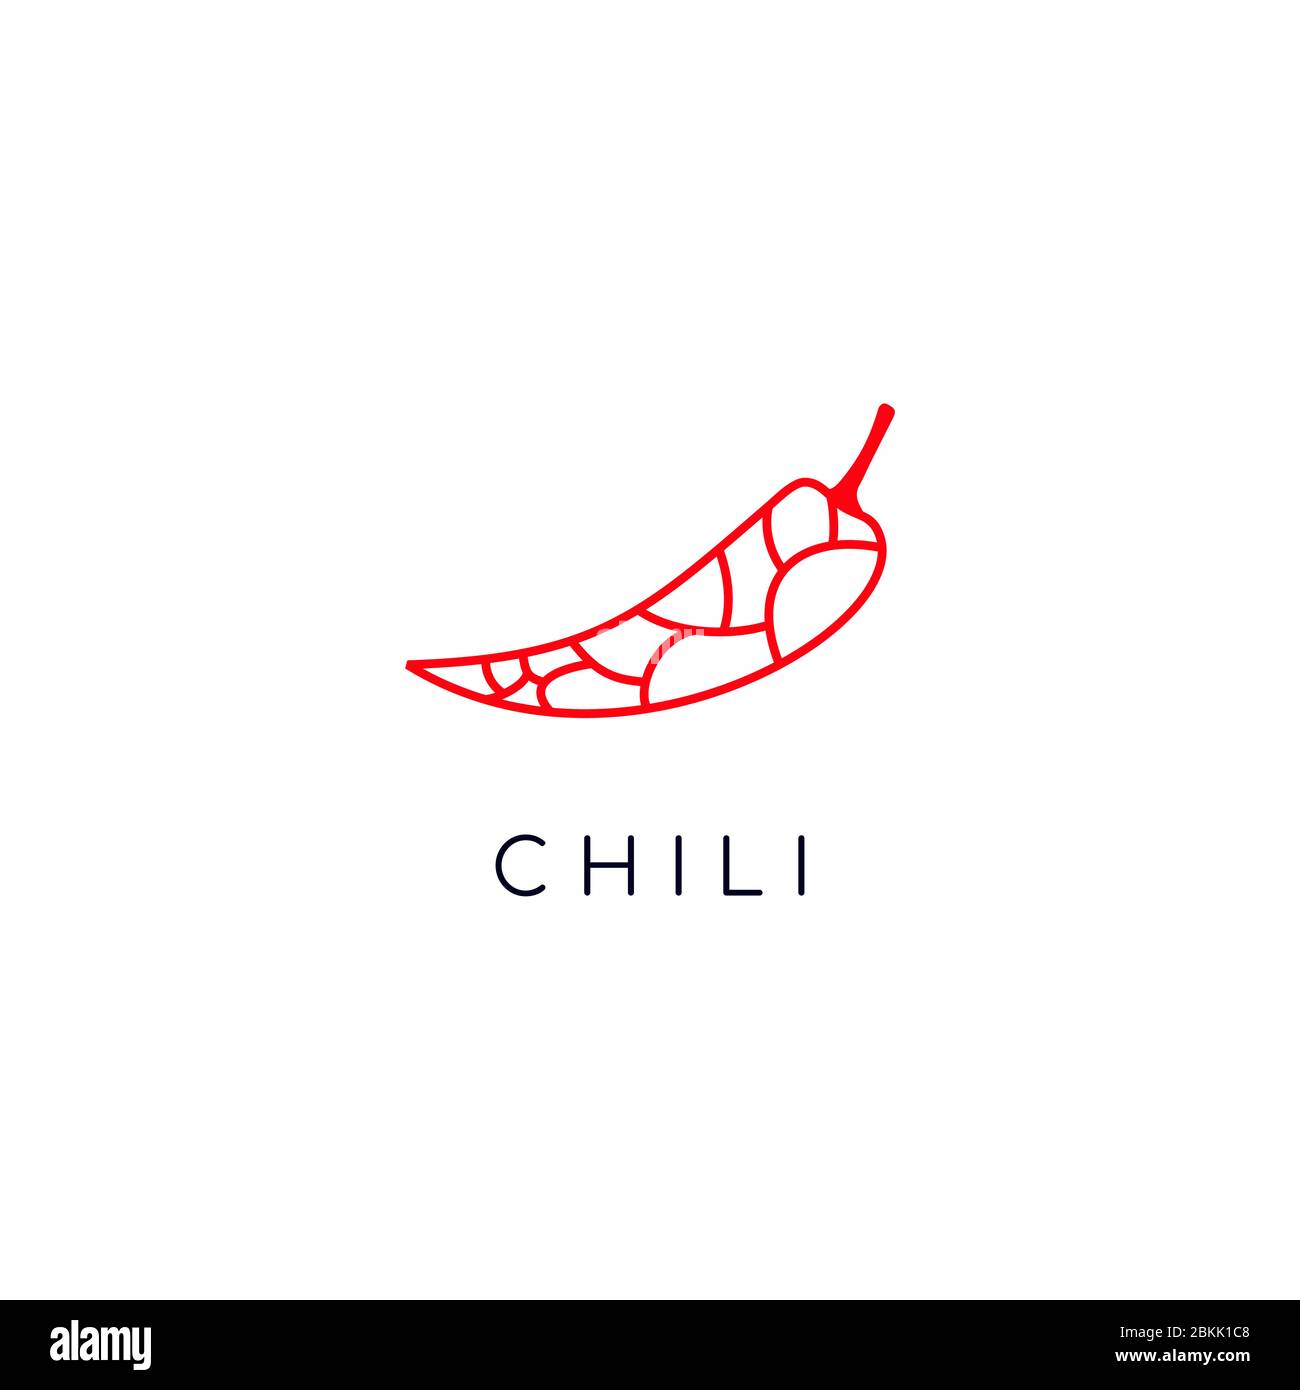 Simple line art chili logo design inspiration Stock Vector